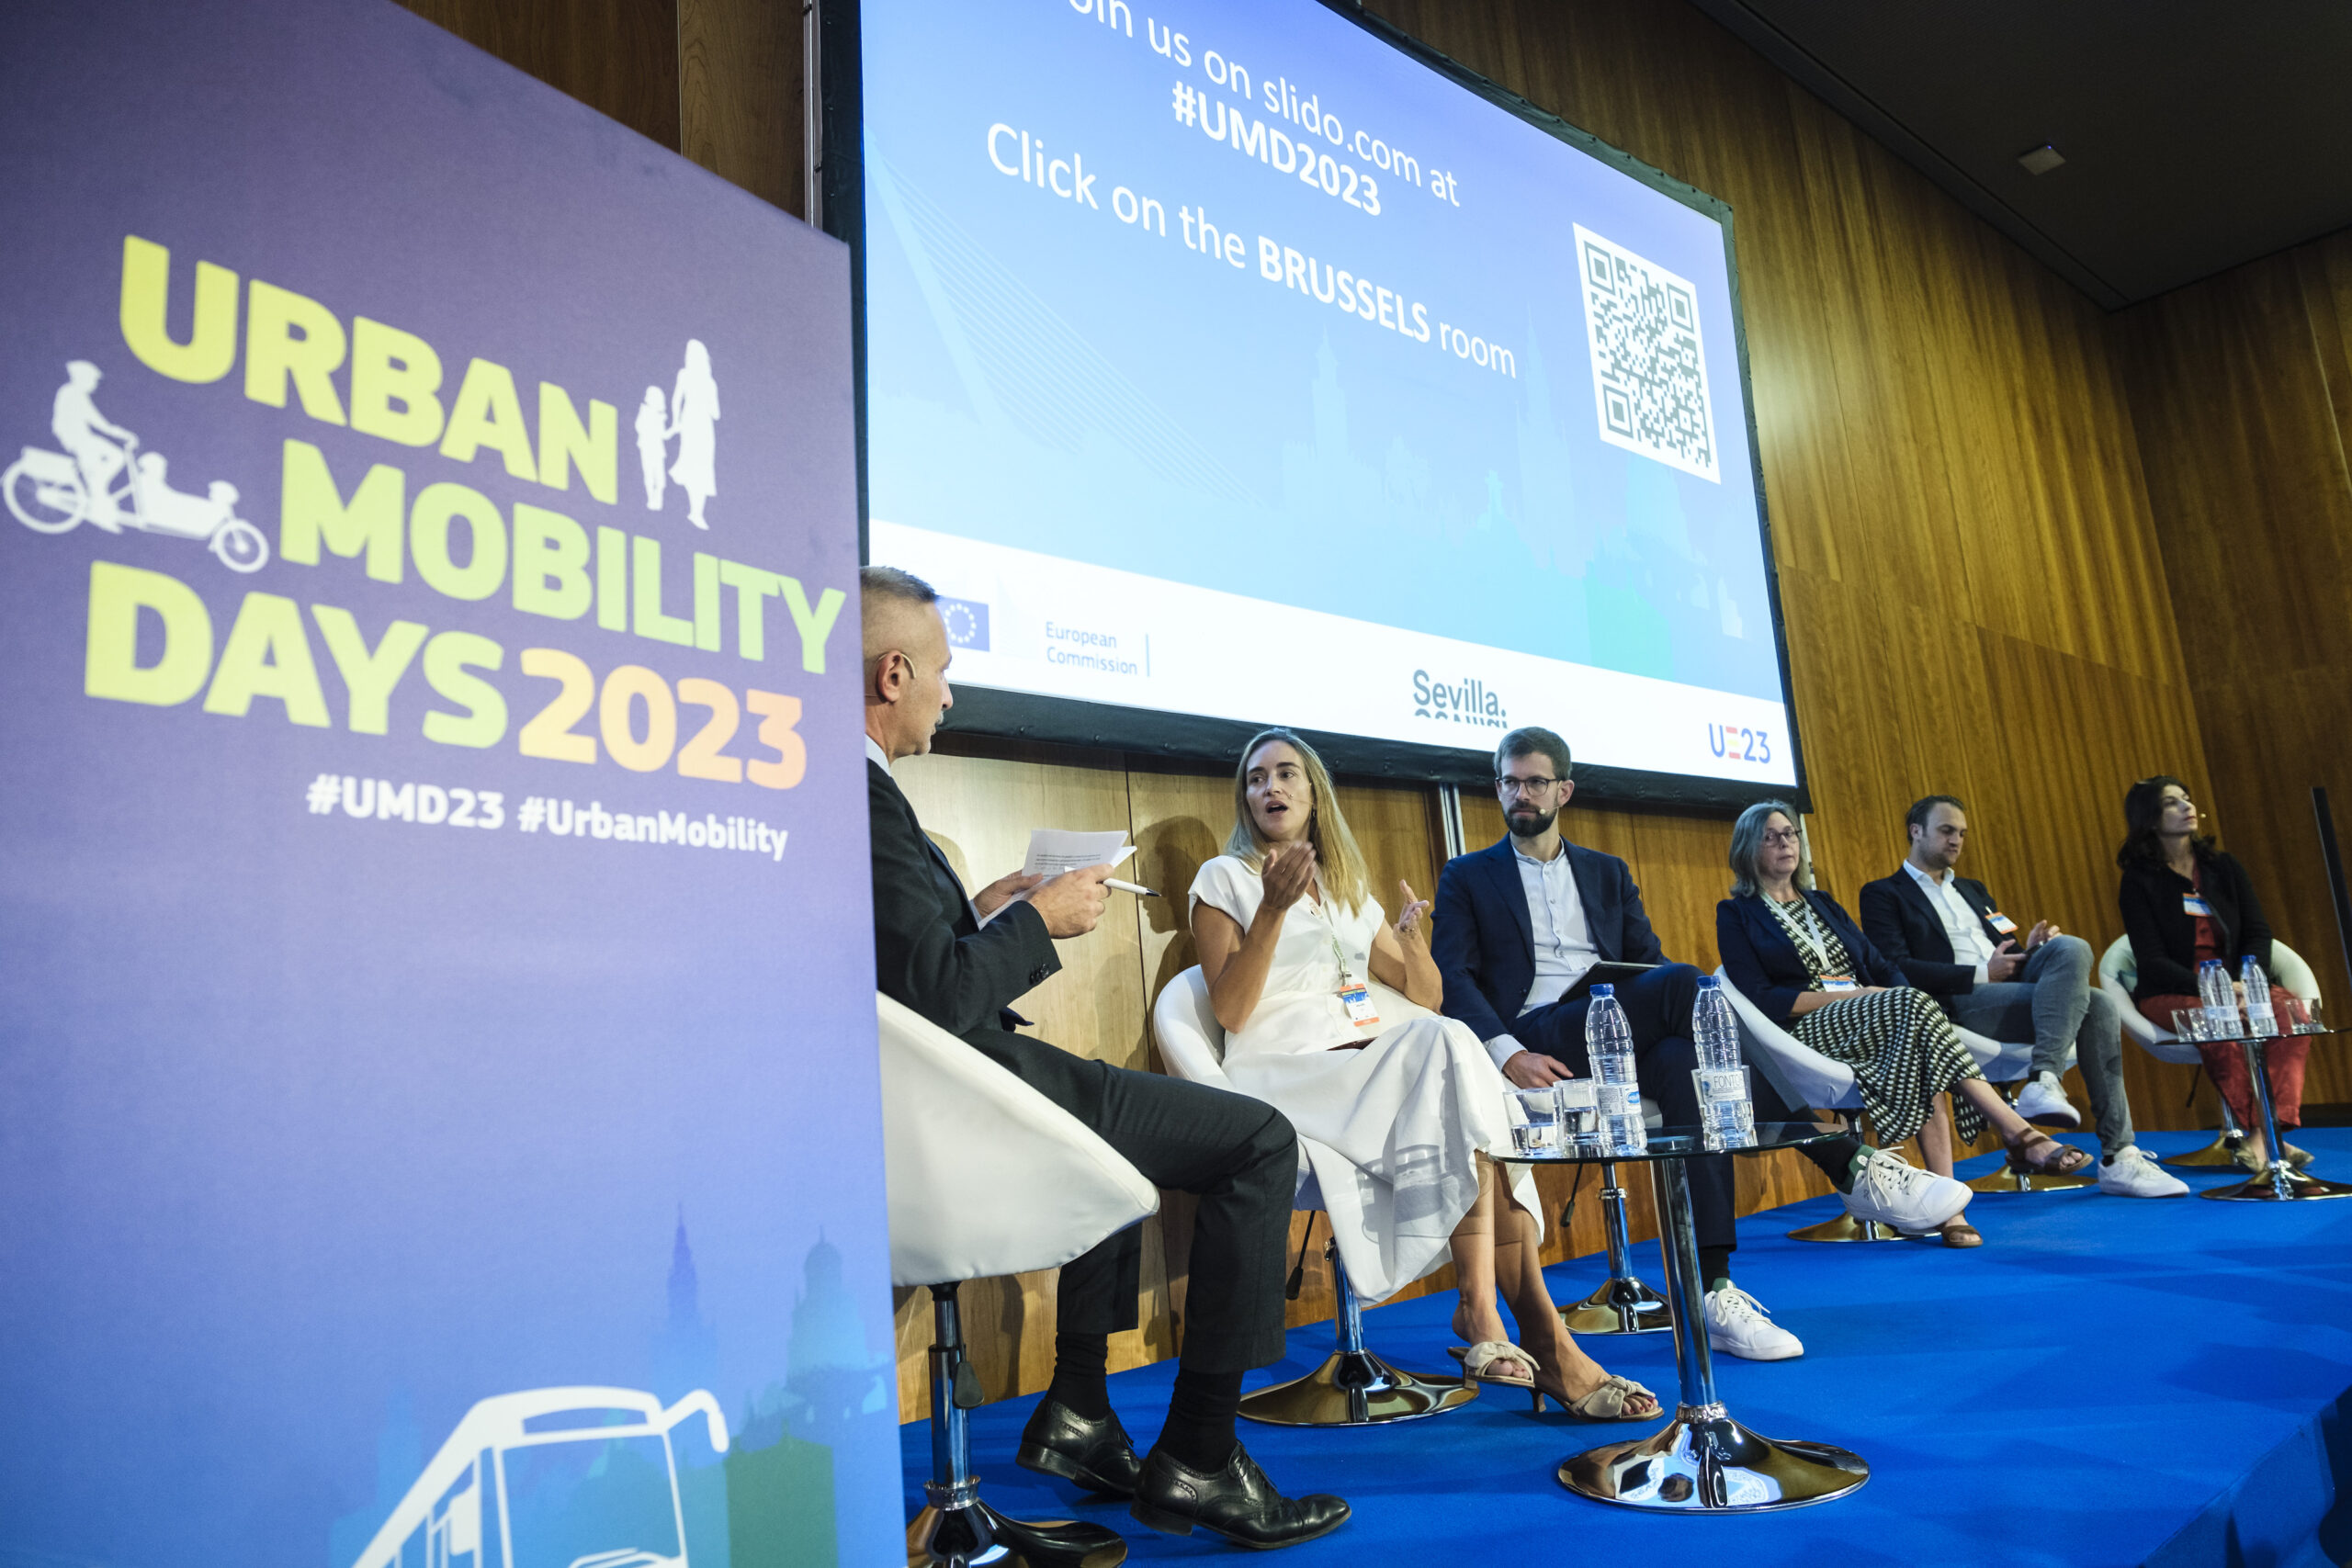 T4SM spoke the European Commission’s Urban Mobility Days 2023